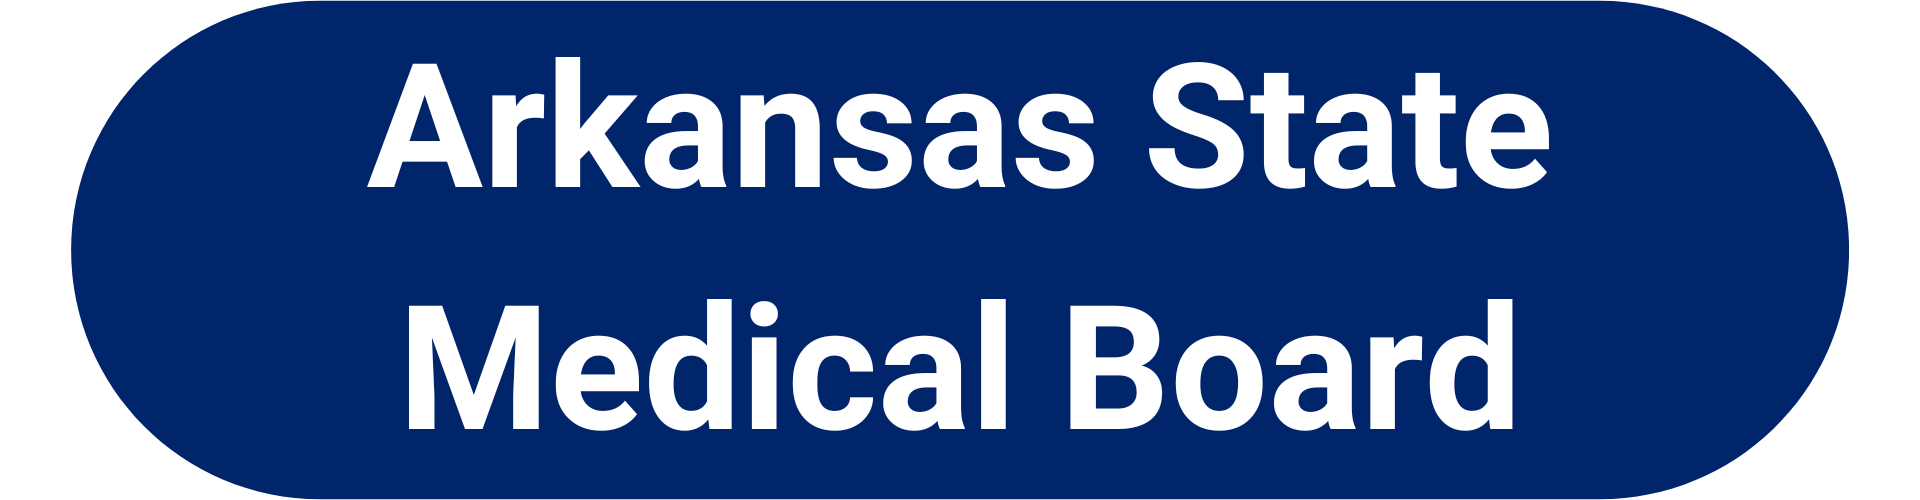 Arkansas State Medical Board